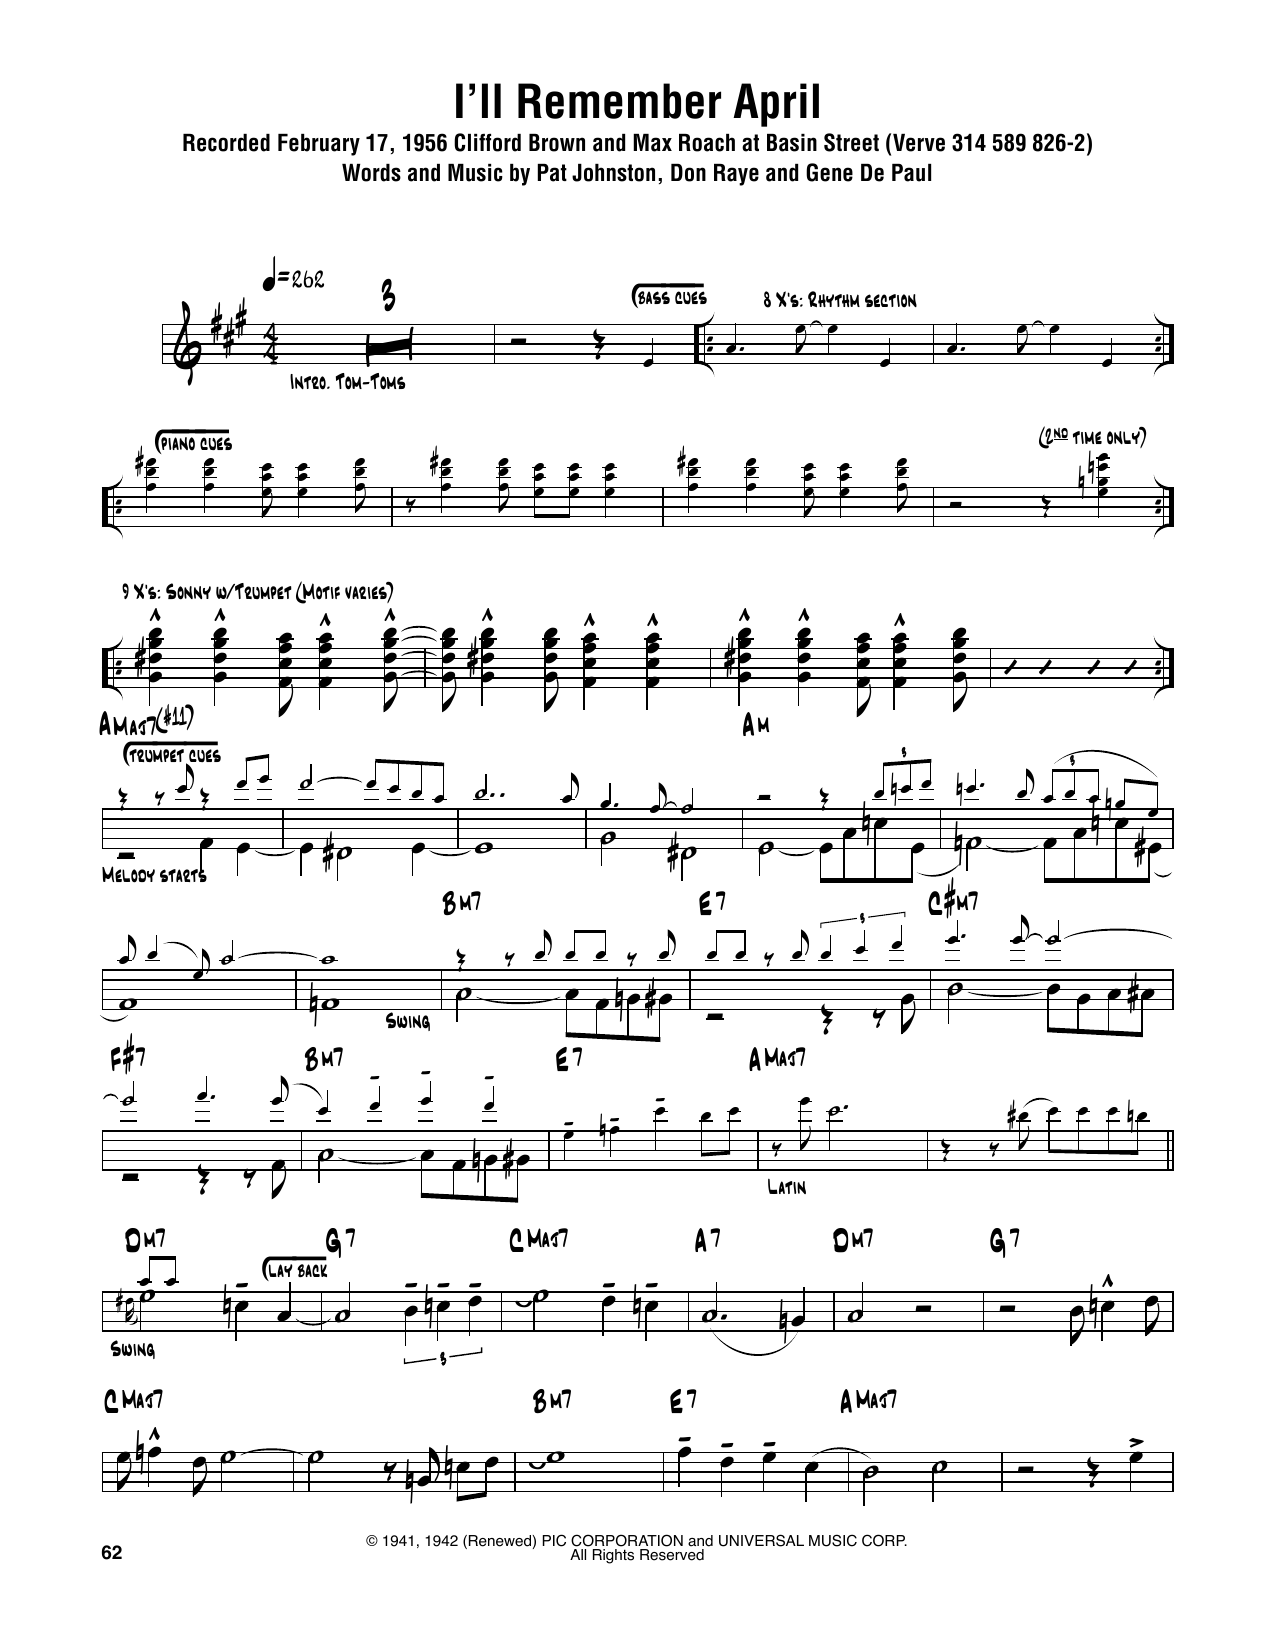 Sonny Rollins I'll Remember April Sheet Music Notes & Chords for Tenor Sax Transcription - Download or Print PDF